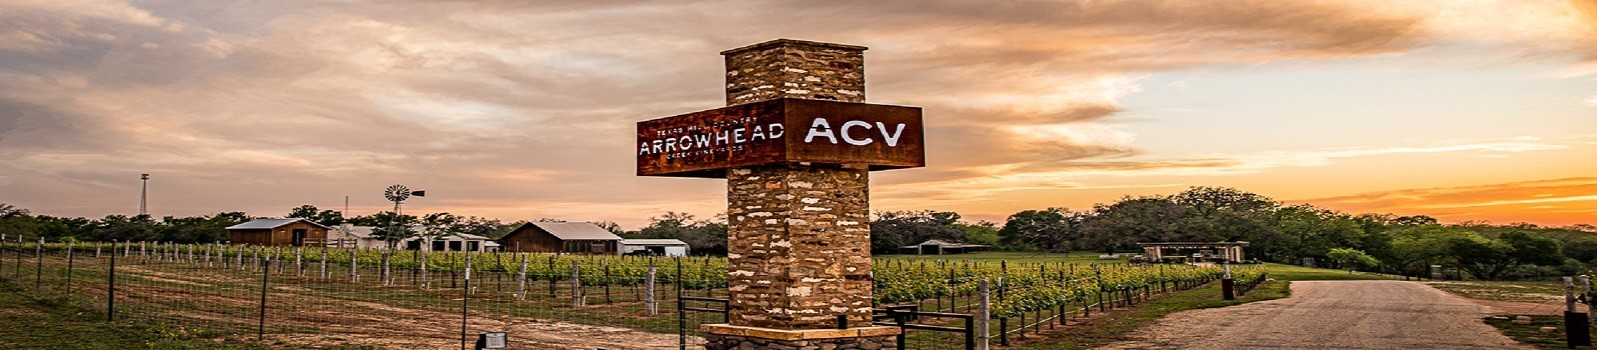 Arrowhead Creek Vineyards Entrance Sign